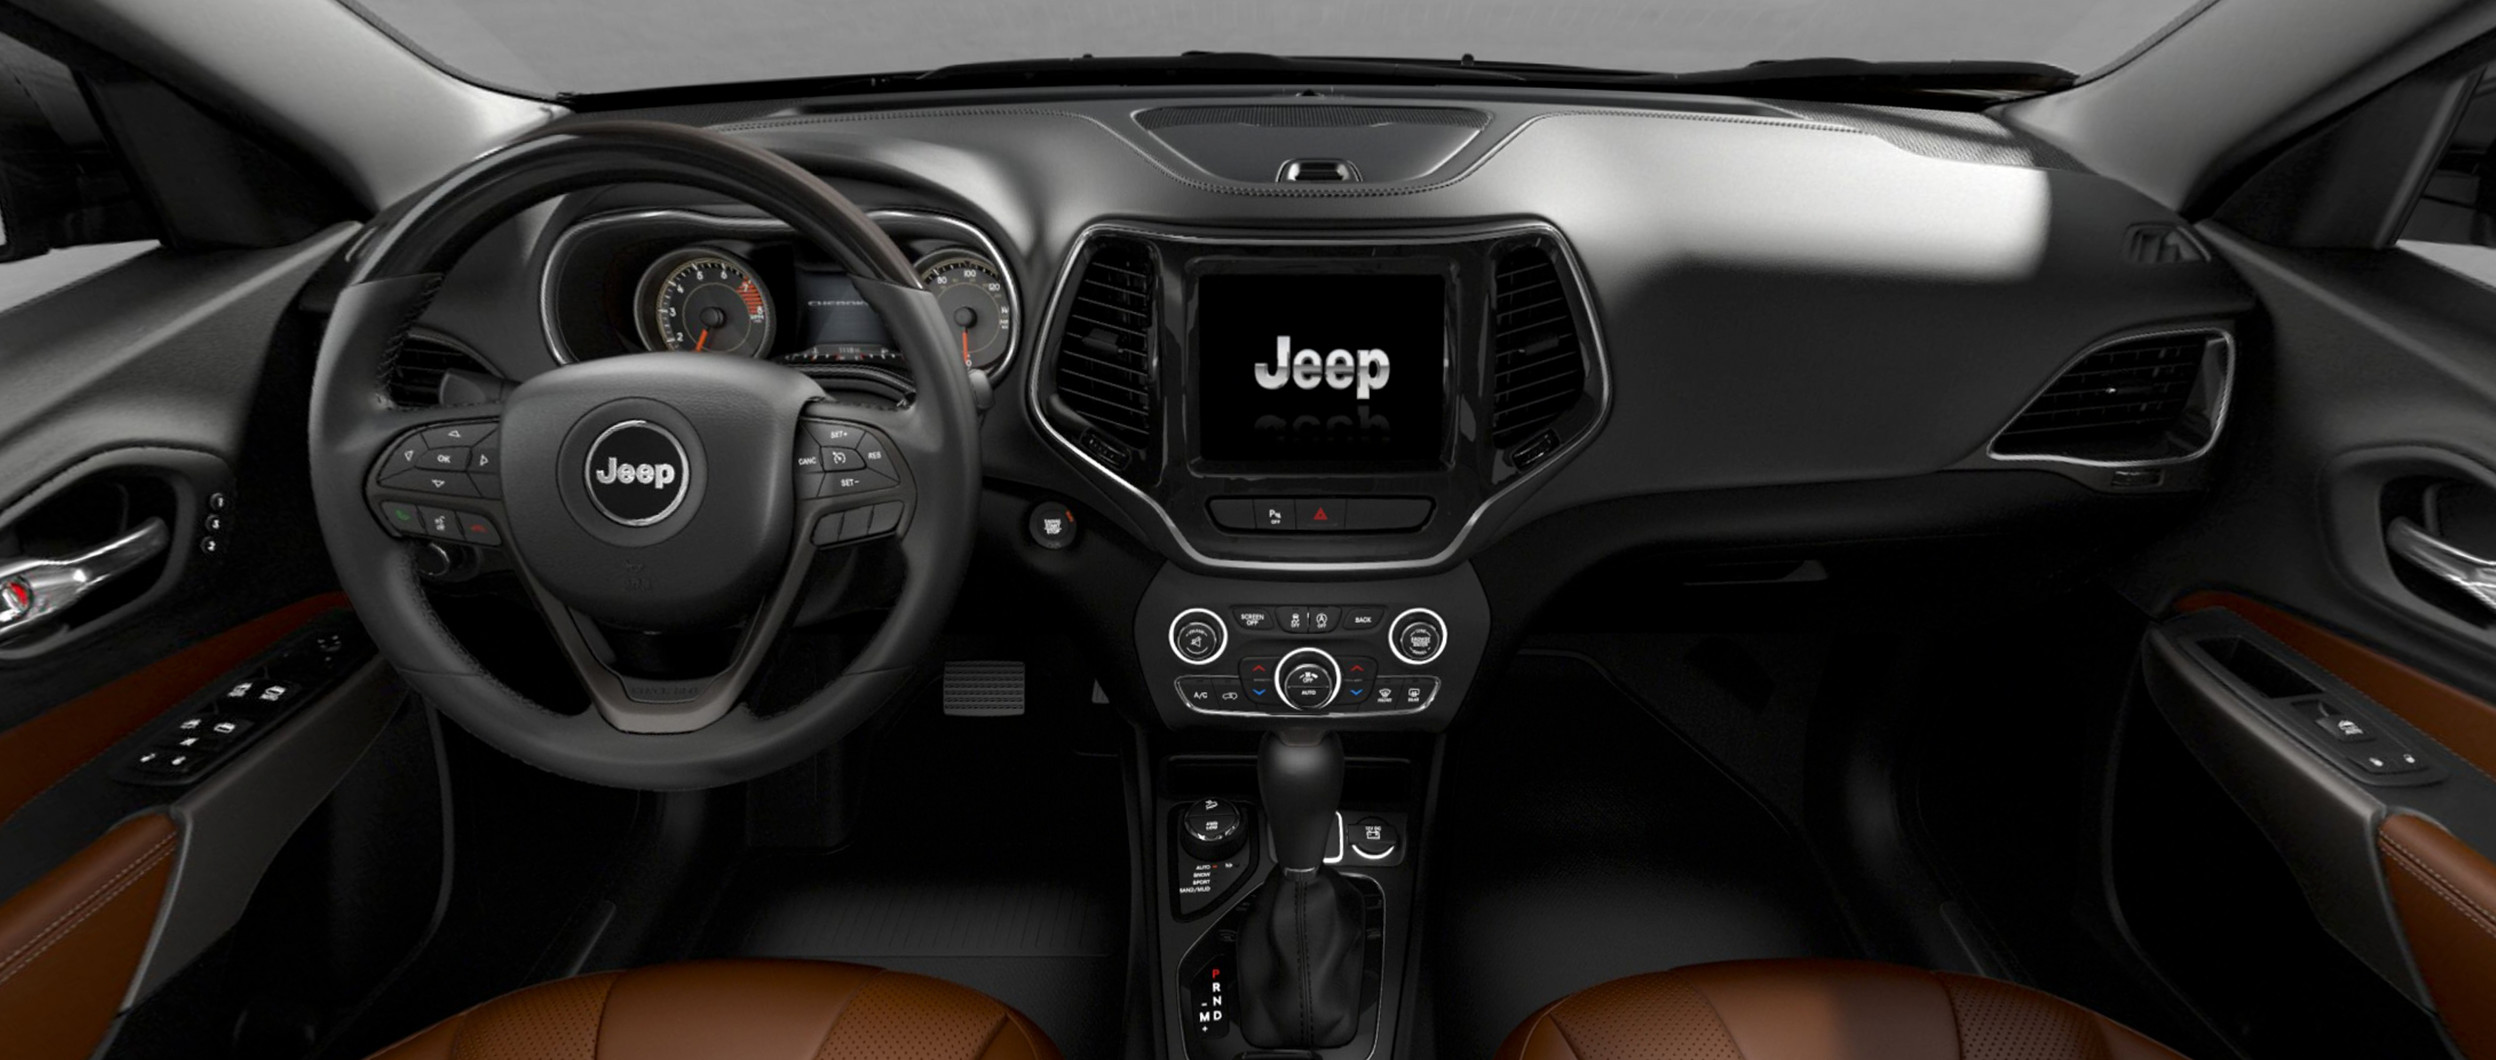 New 2019 Jeep Cherokee Mid Size Suv